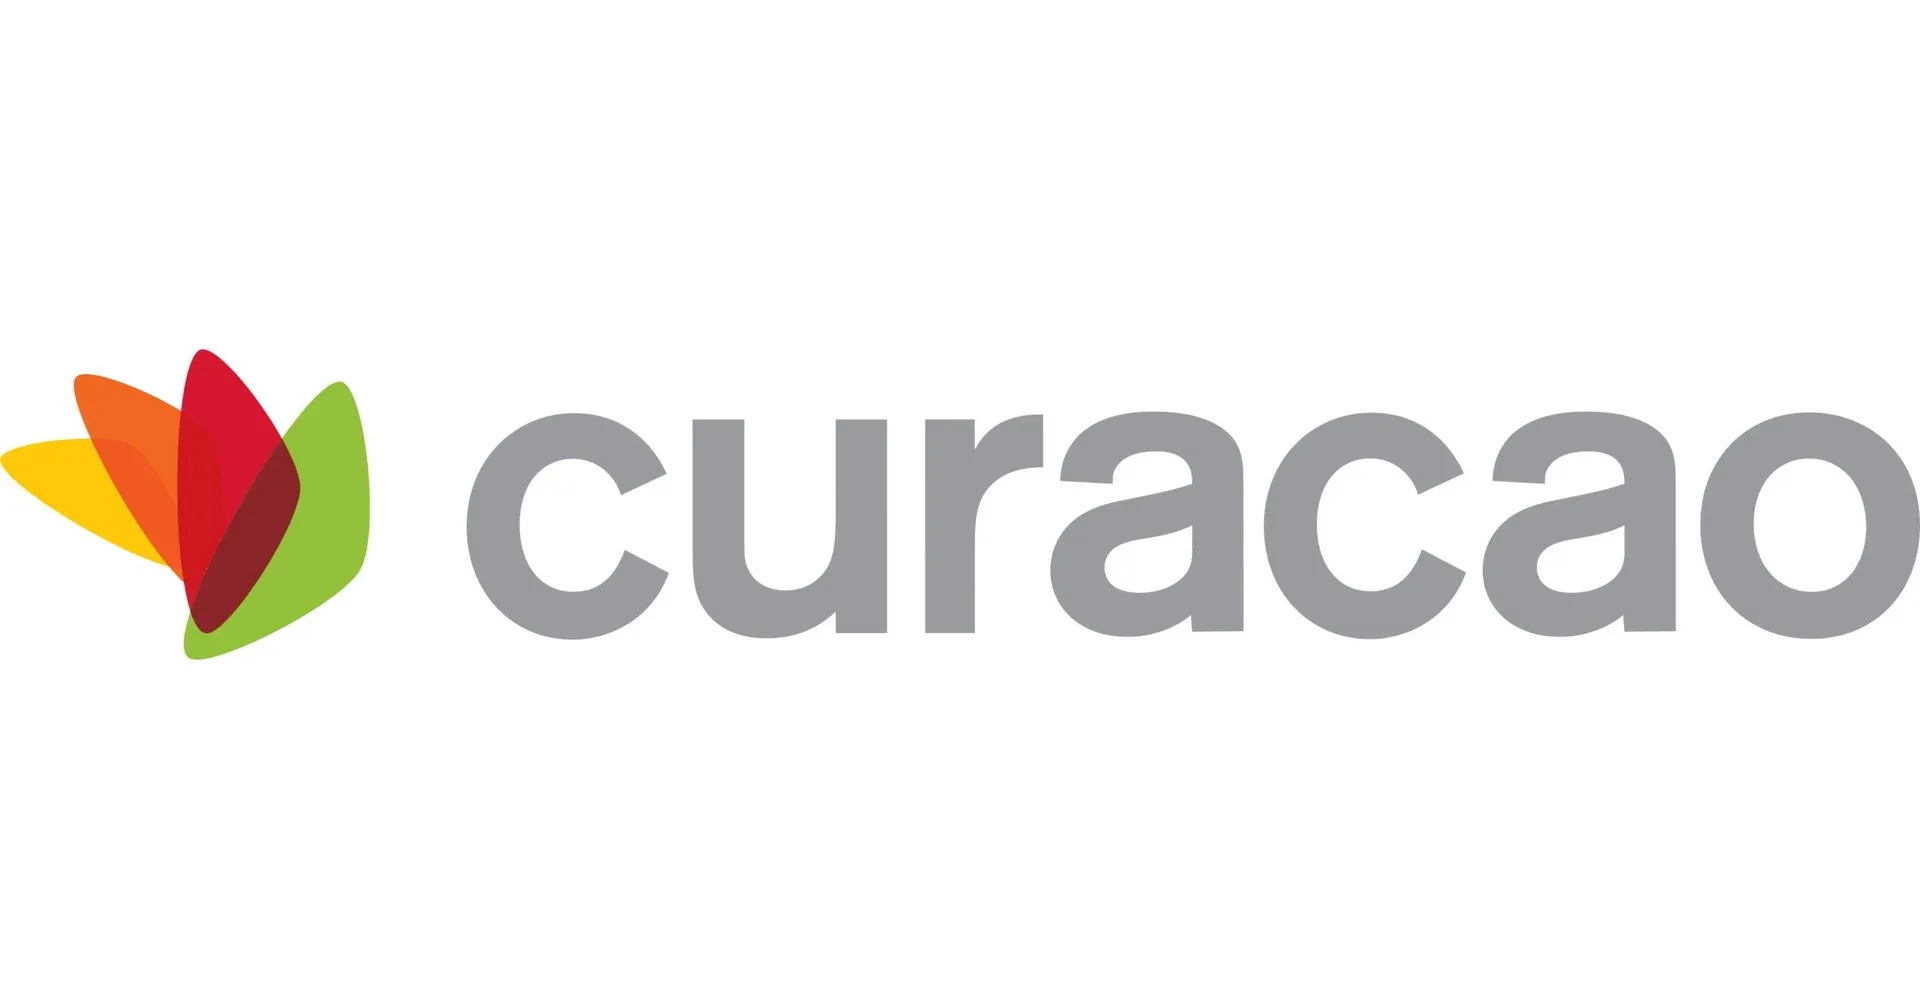 CURACAO logo. Current weekly ad